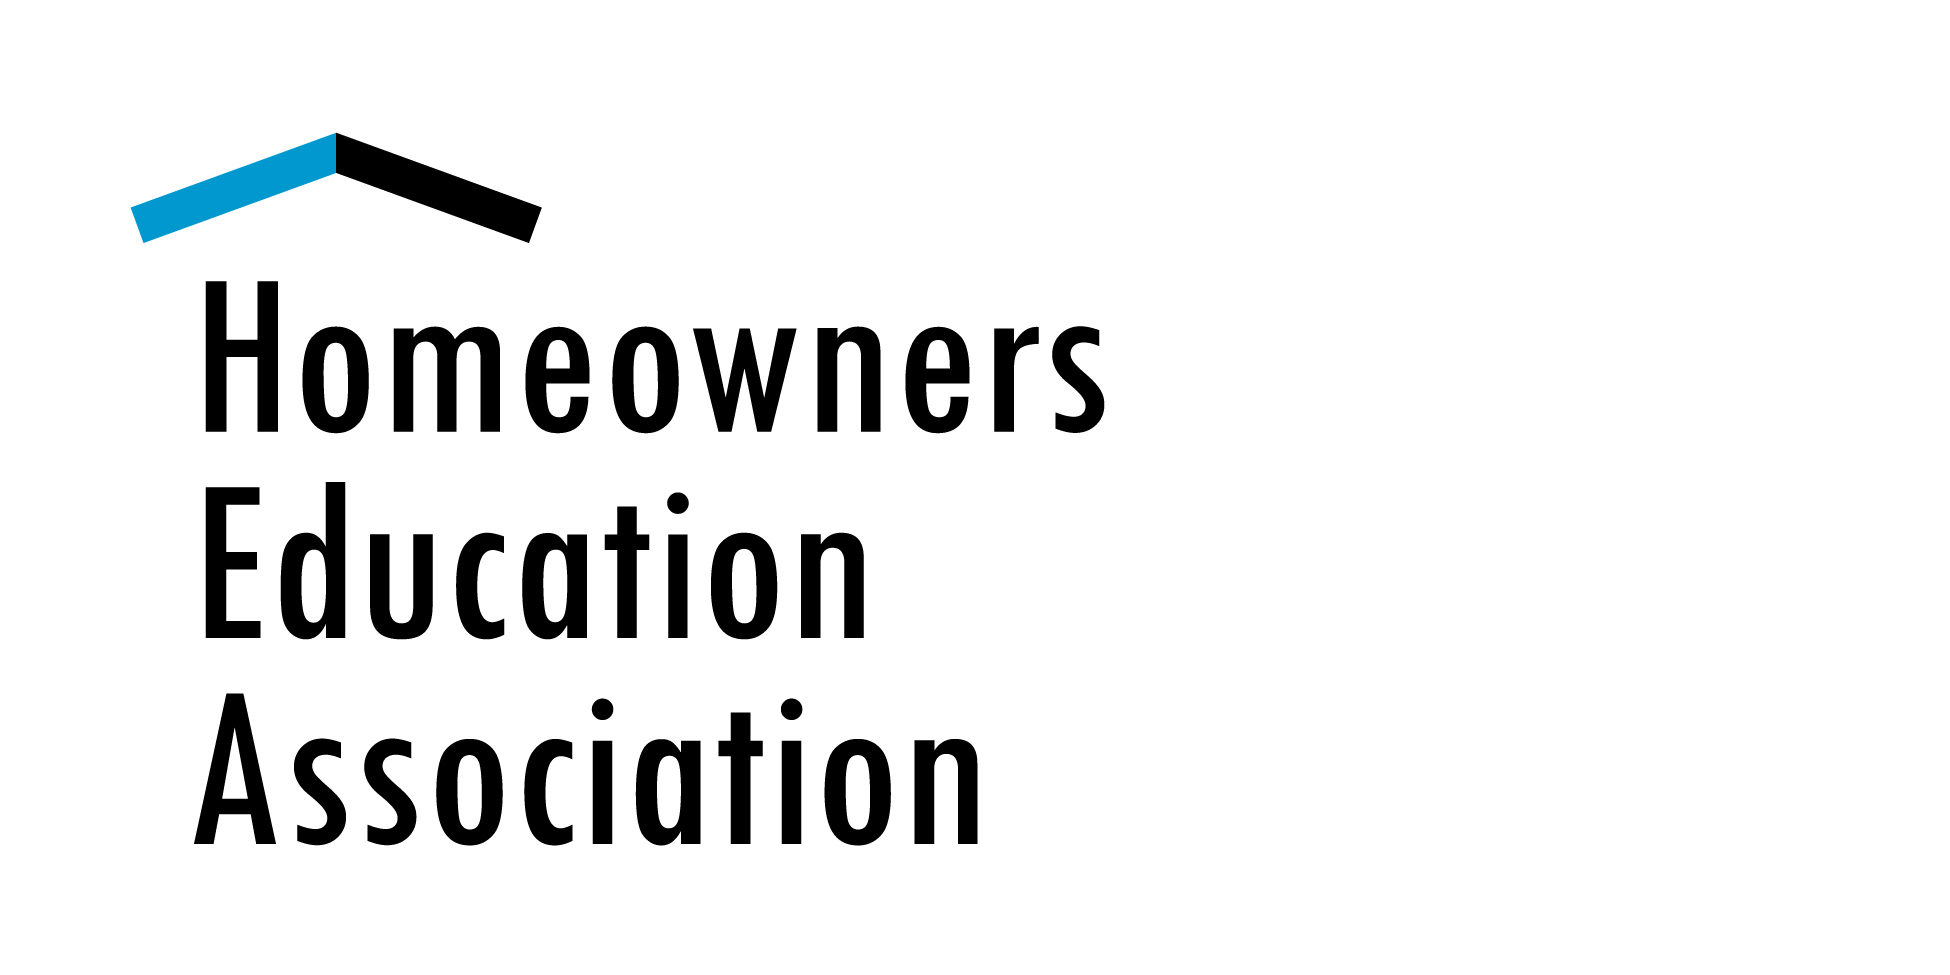 Homeowners Education Association logo